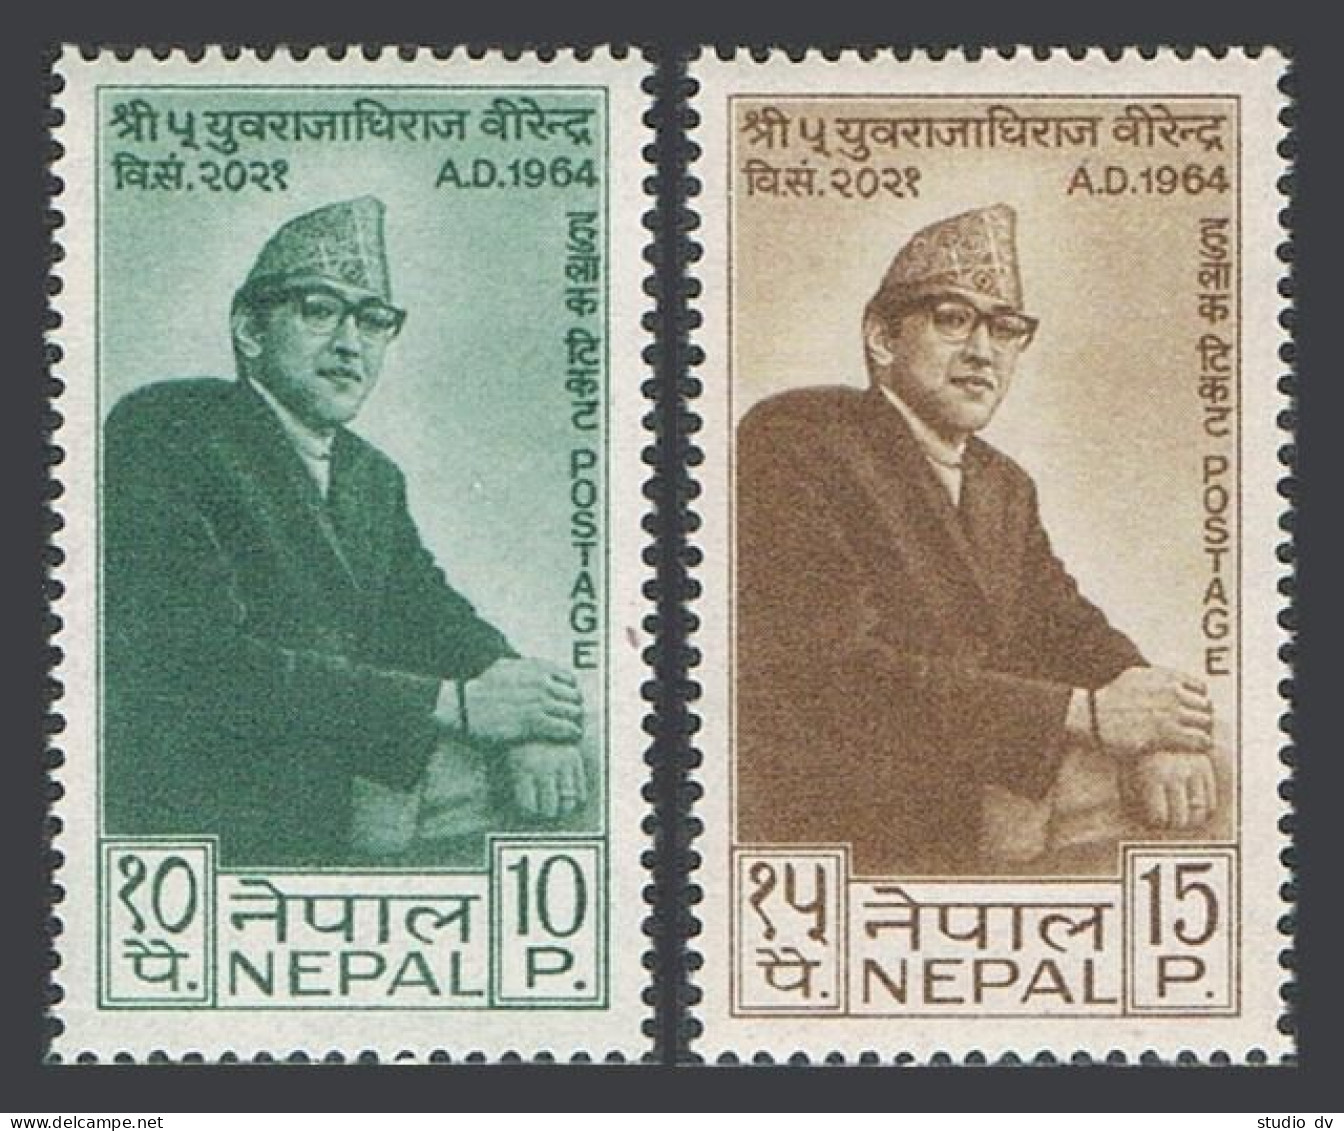 Nepal 176-177,MNH.Michel 185-186. Crown Prince Birendra,19th Birthday,1964. - Népal